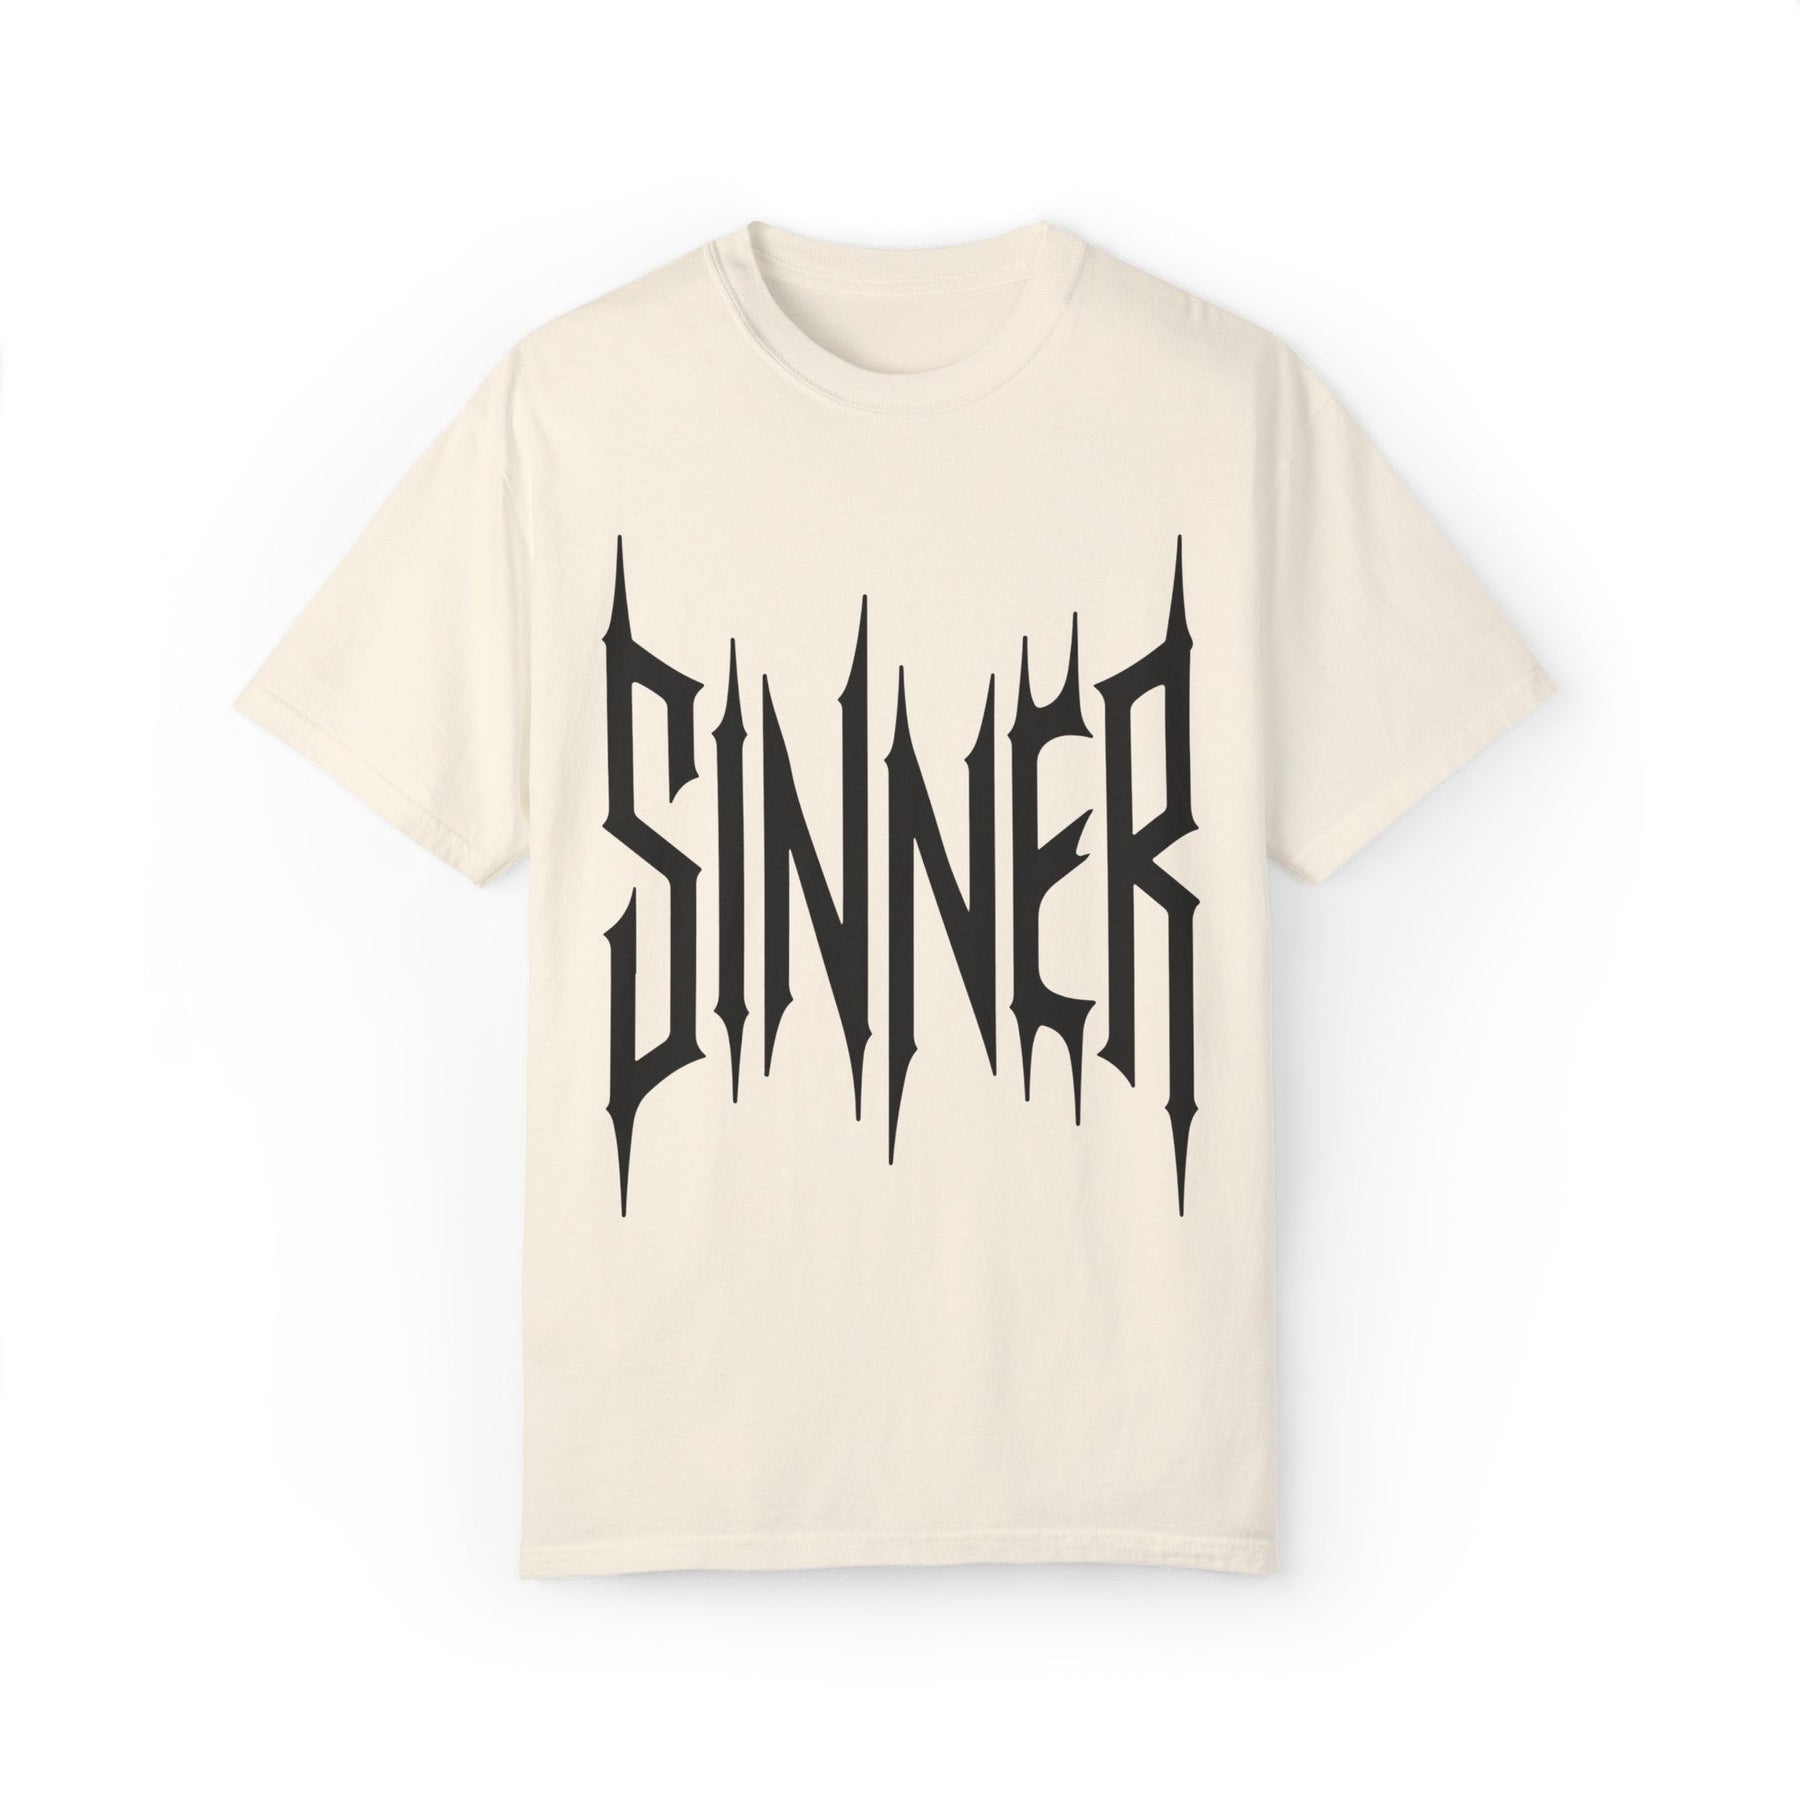 Sinner Oversized Beefy Tee - Goth Cloth Co.T - Shirt19953556928606253157